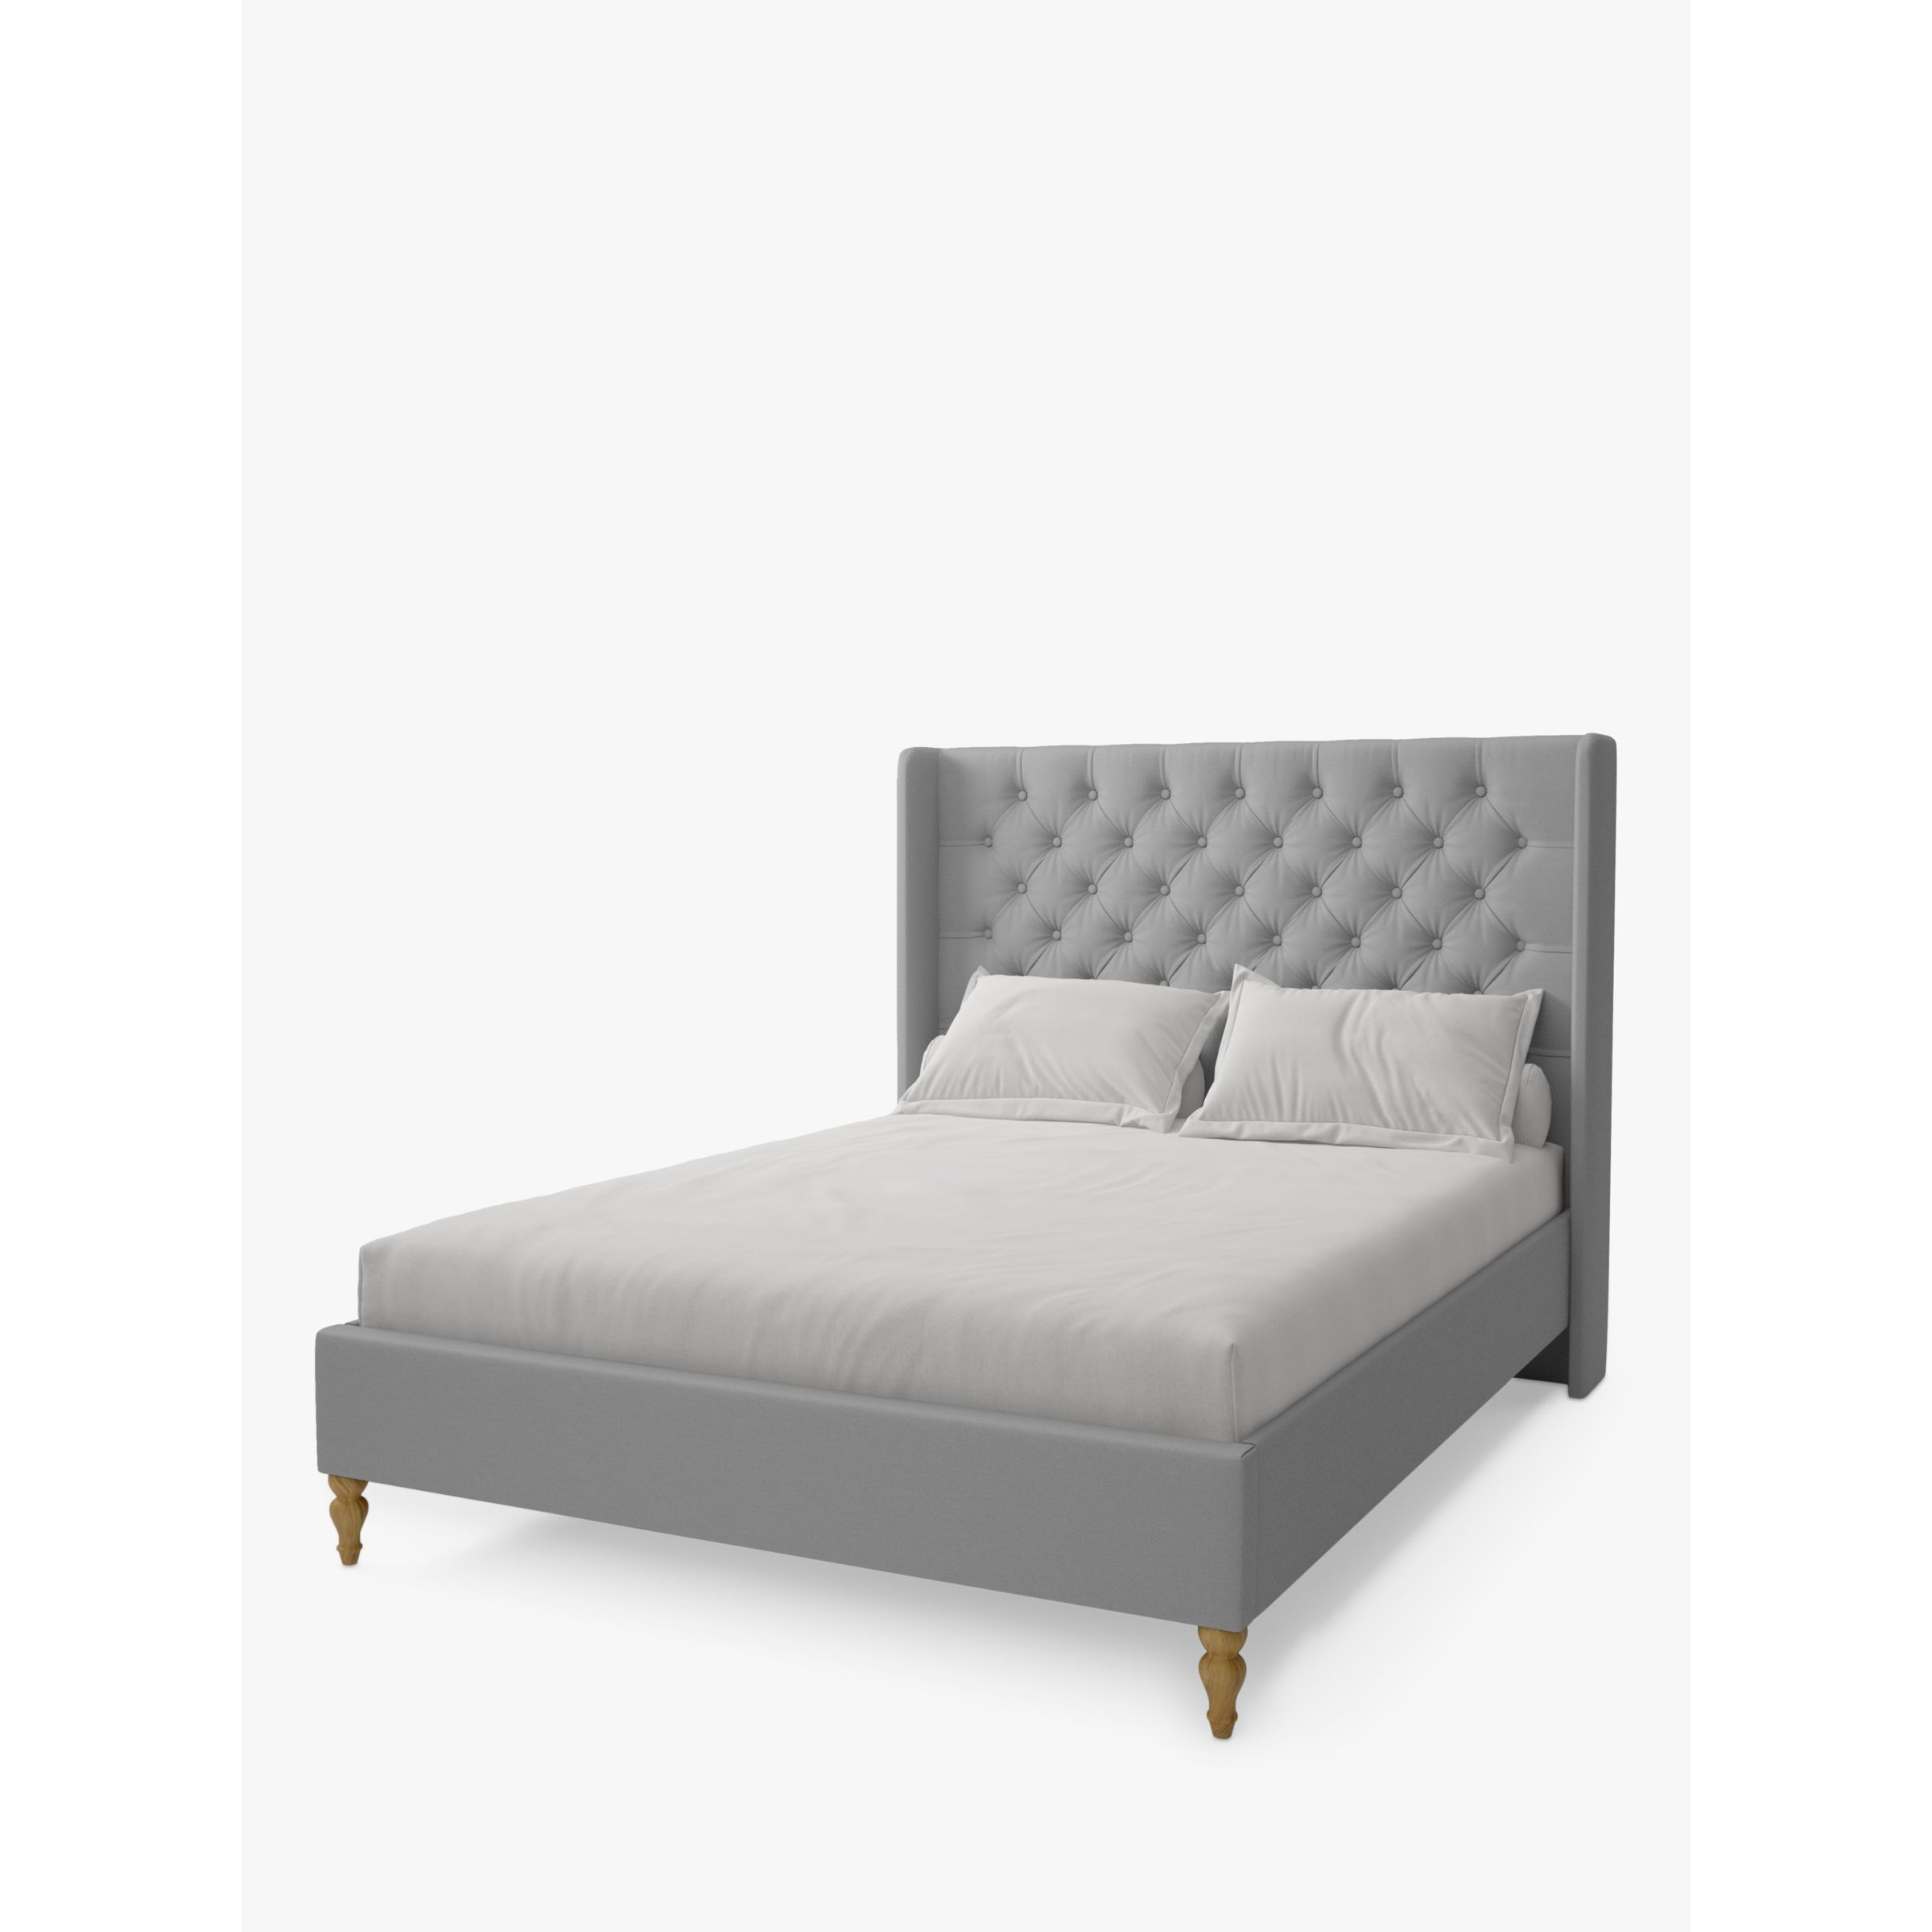 Koti Home Astley Upholstered Bed Frame, Double - image 1